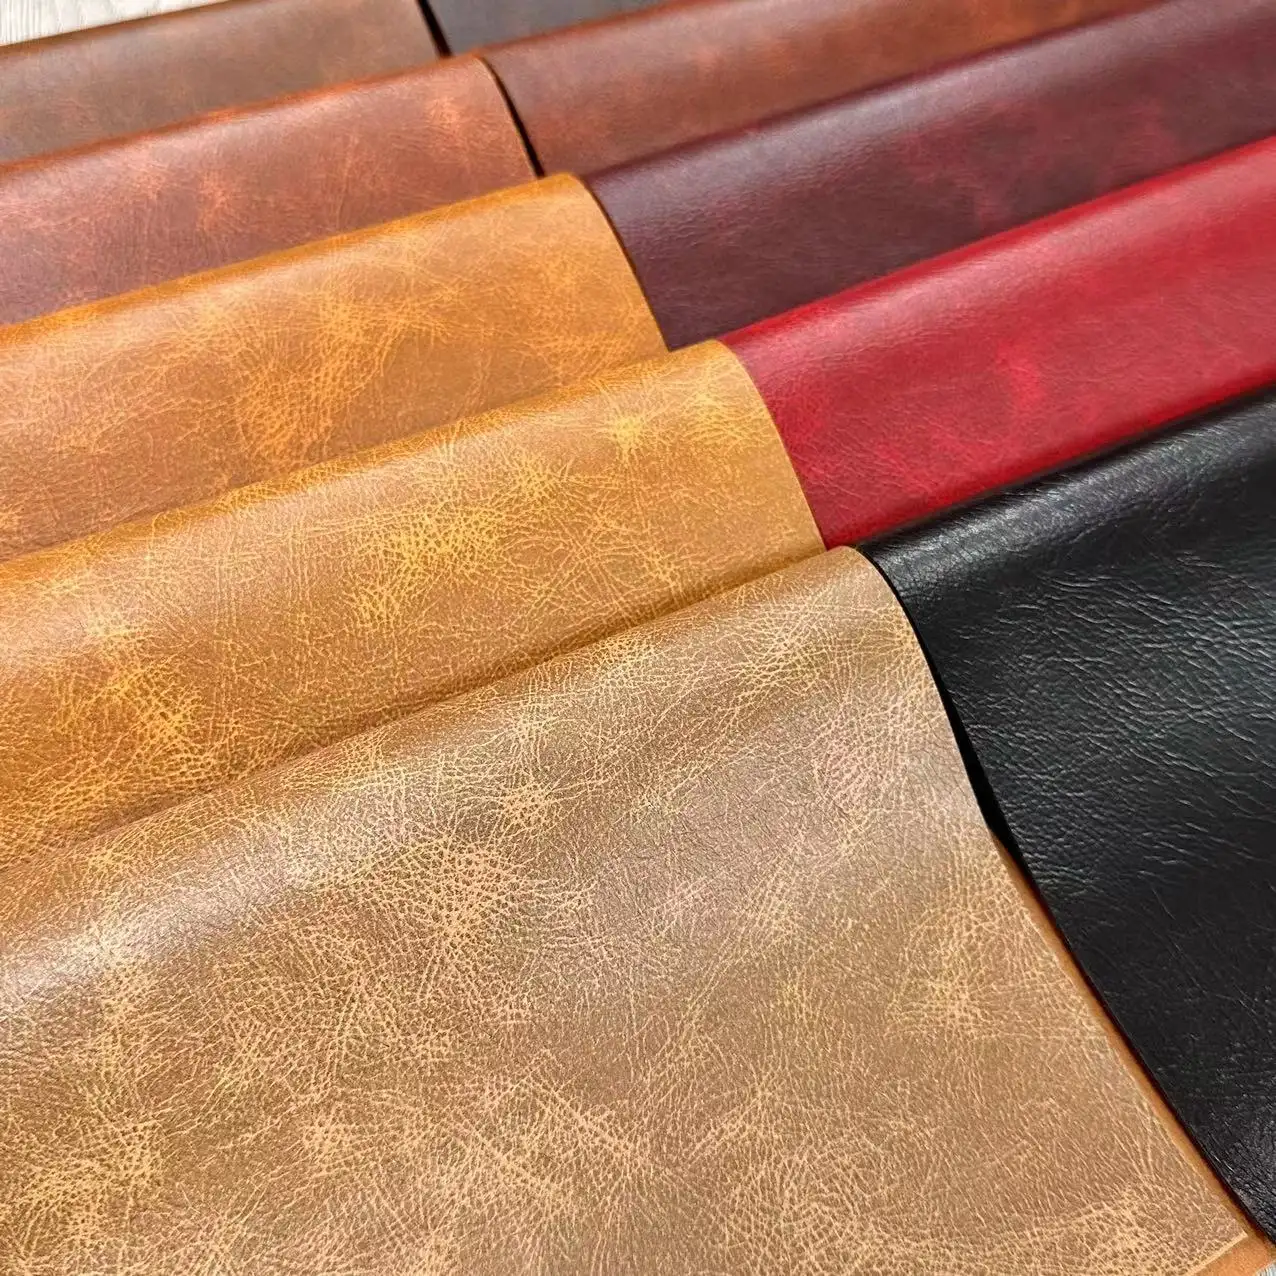 new design pvc pu synthetic leather for sofa and bag samsonite cuero de pvc cuero sintetico en pvc rexine mcm kylieskinmurah